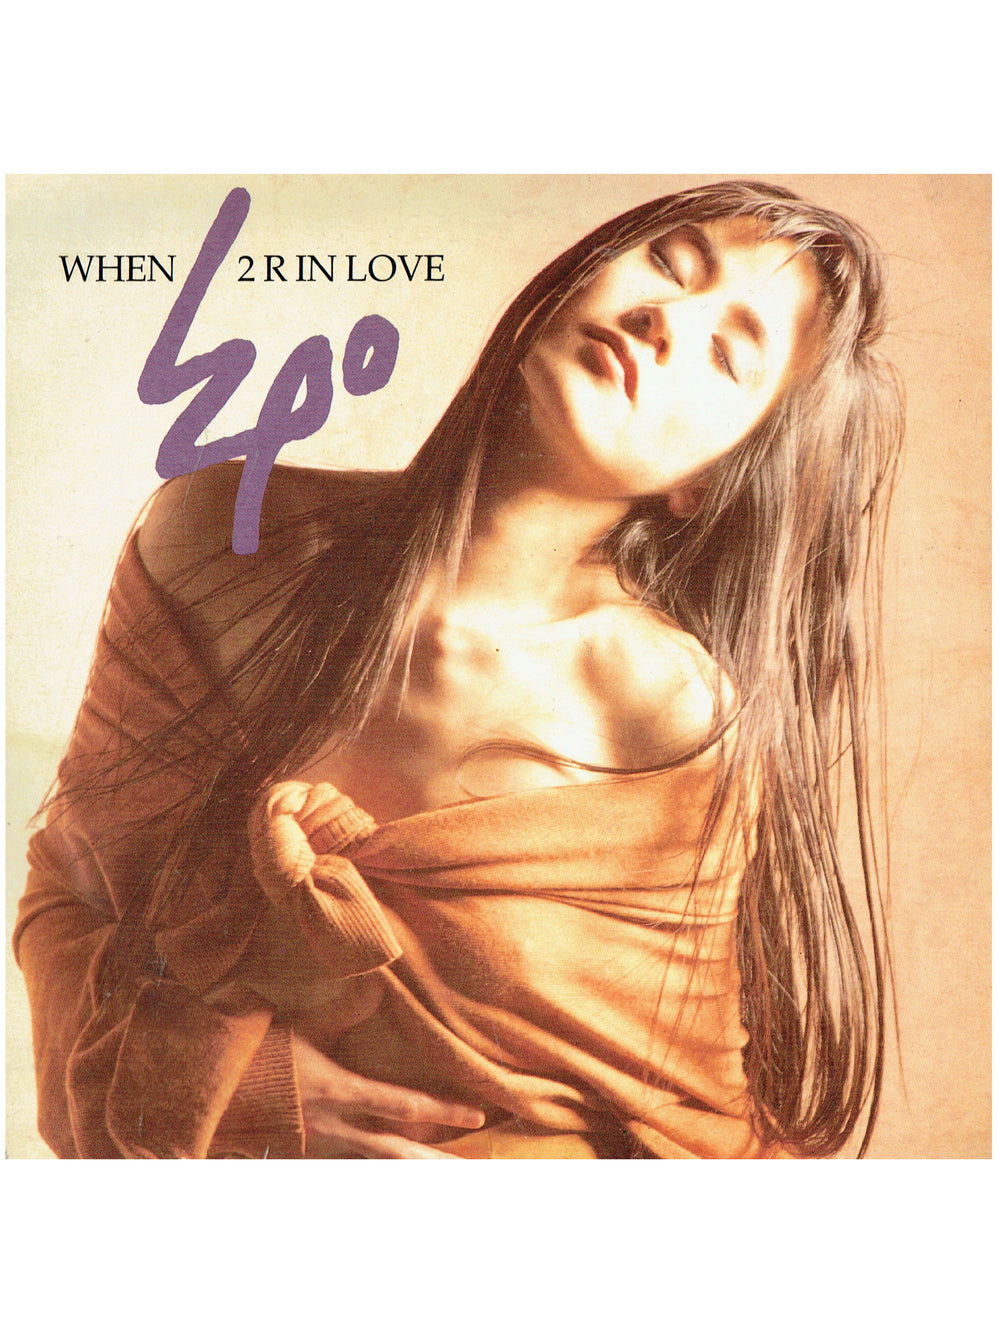 EPO When 2 R In Love 7 Inch Vinyl UK Original Release Prince TR